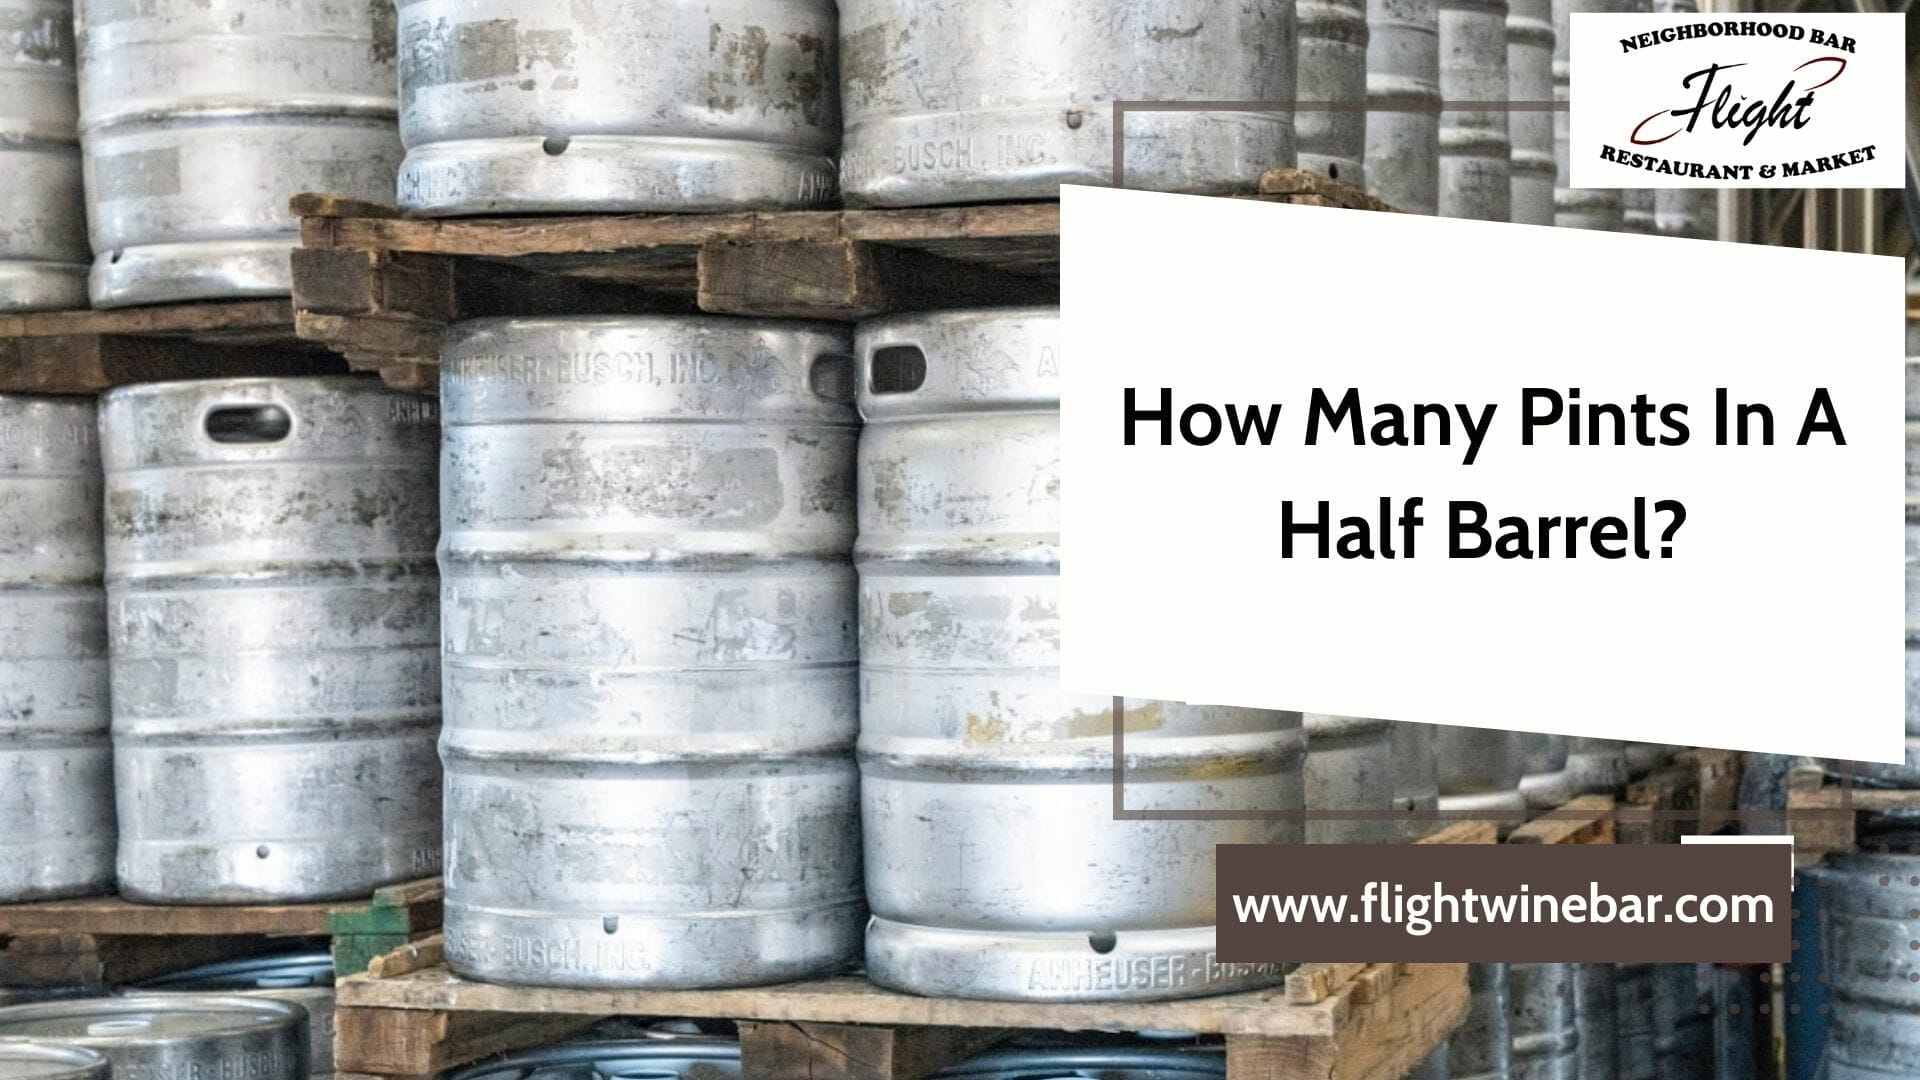 How Many Pints In A Half Barrel